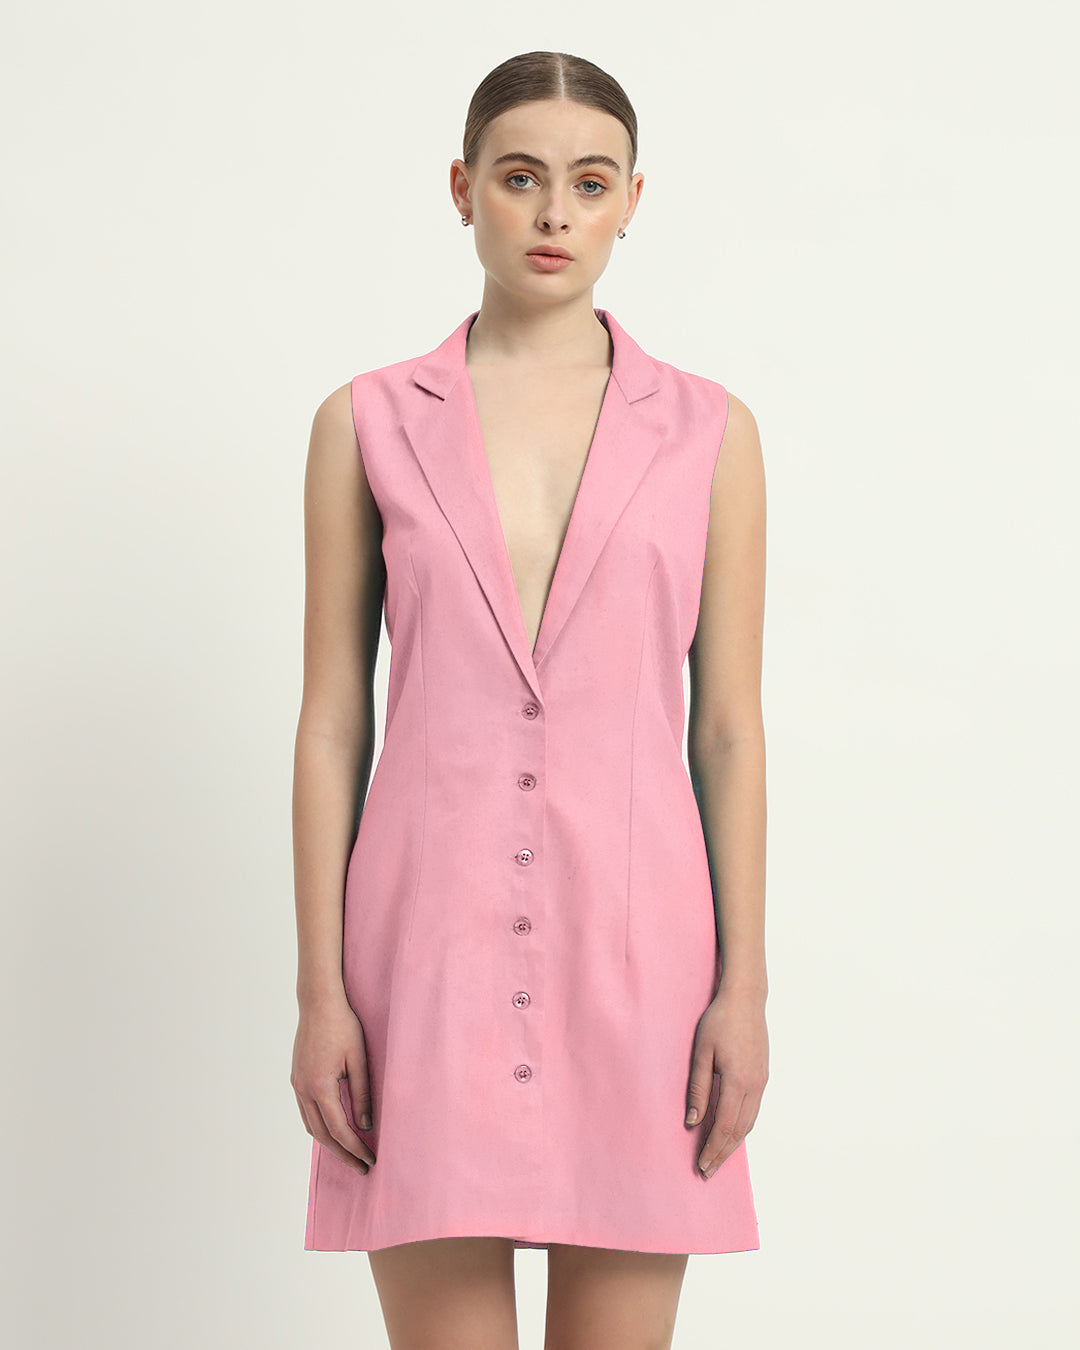 The Vernon Fondant Pink Cotton Dress